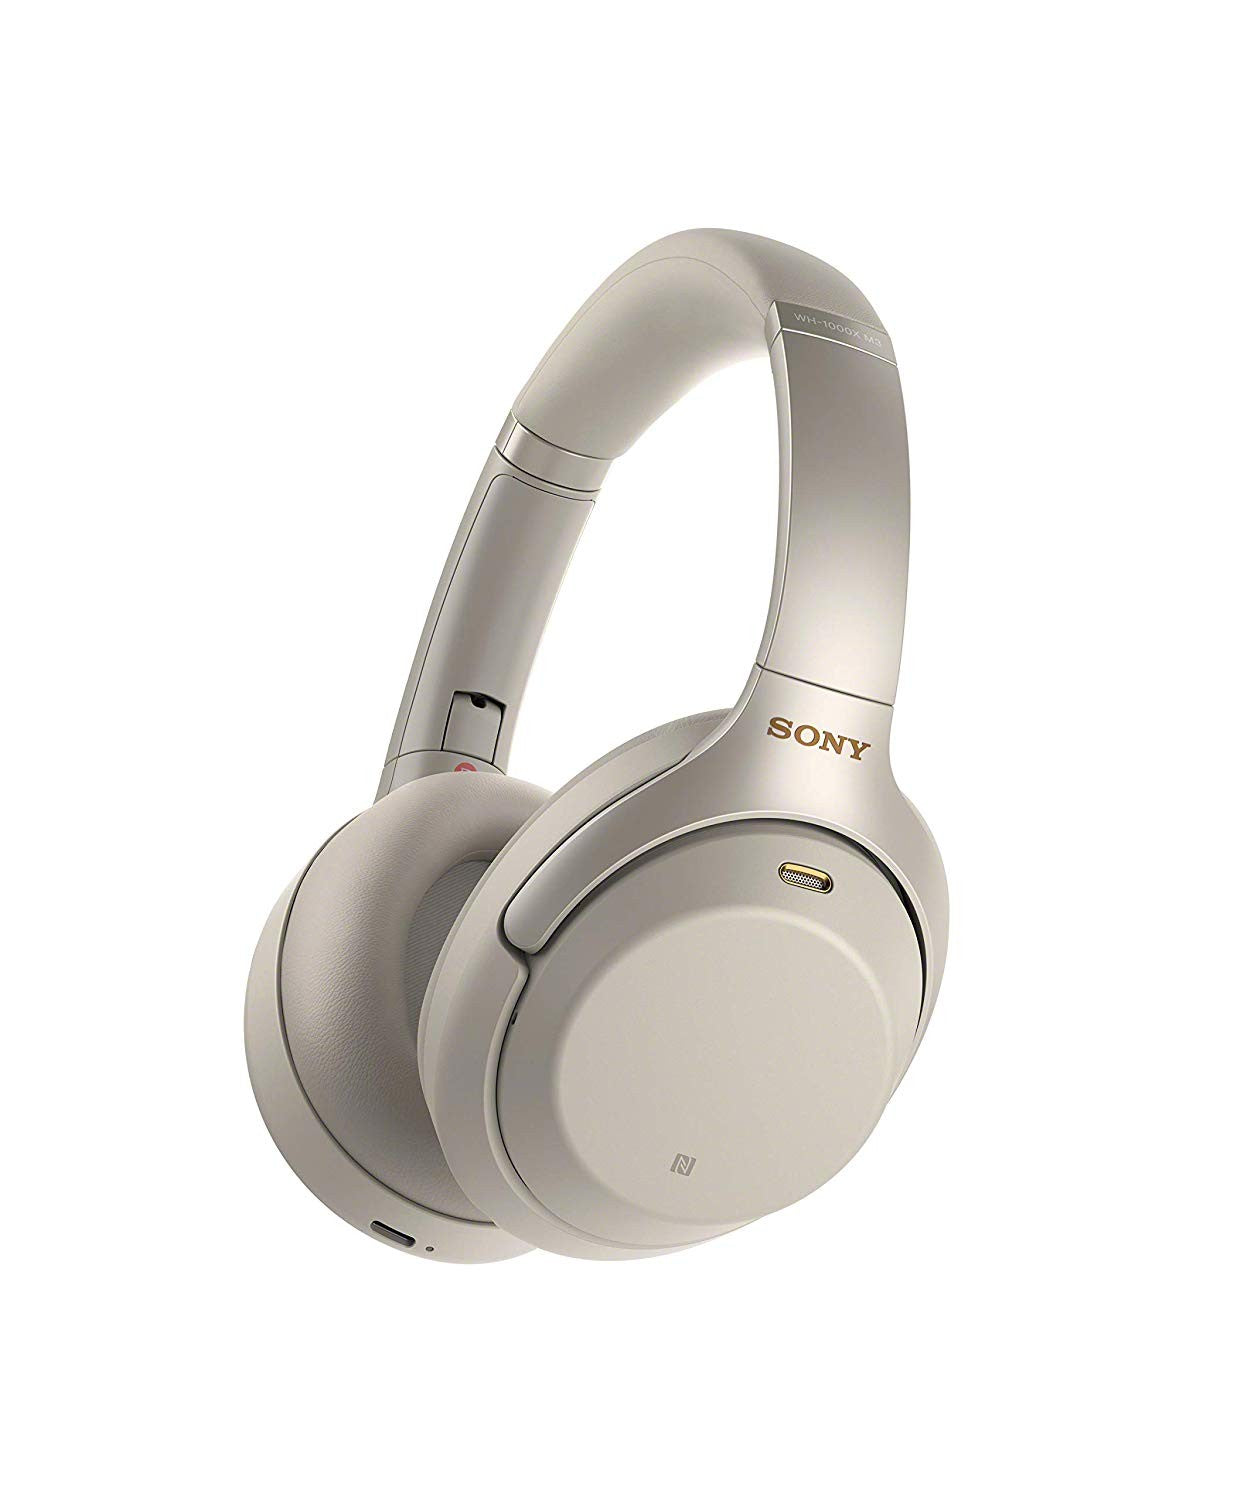 Sony Bluetooth Headphone Noise Cancelling Premium Wireless